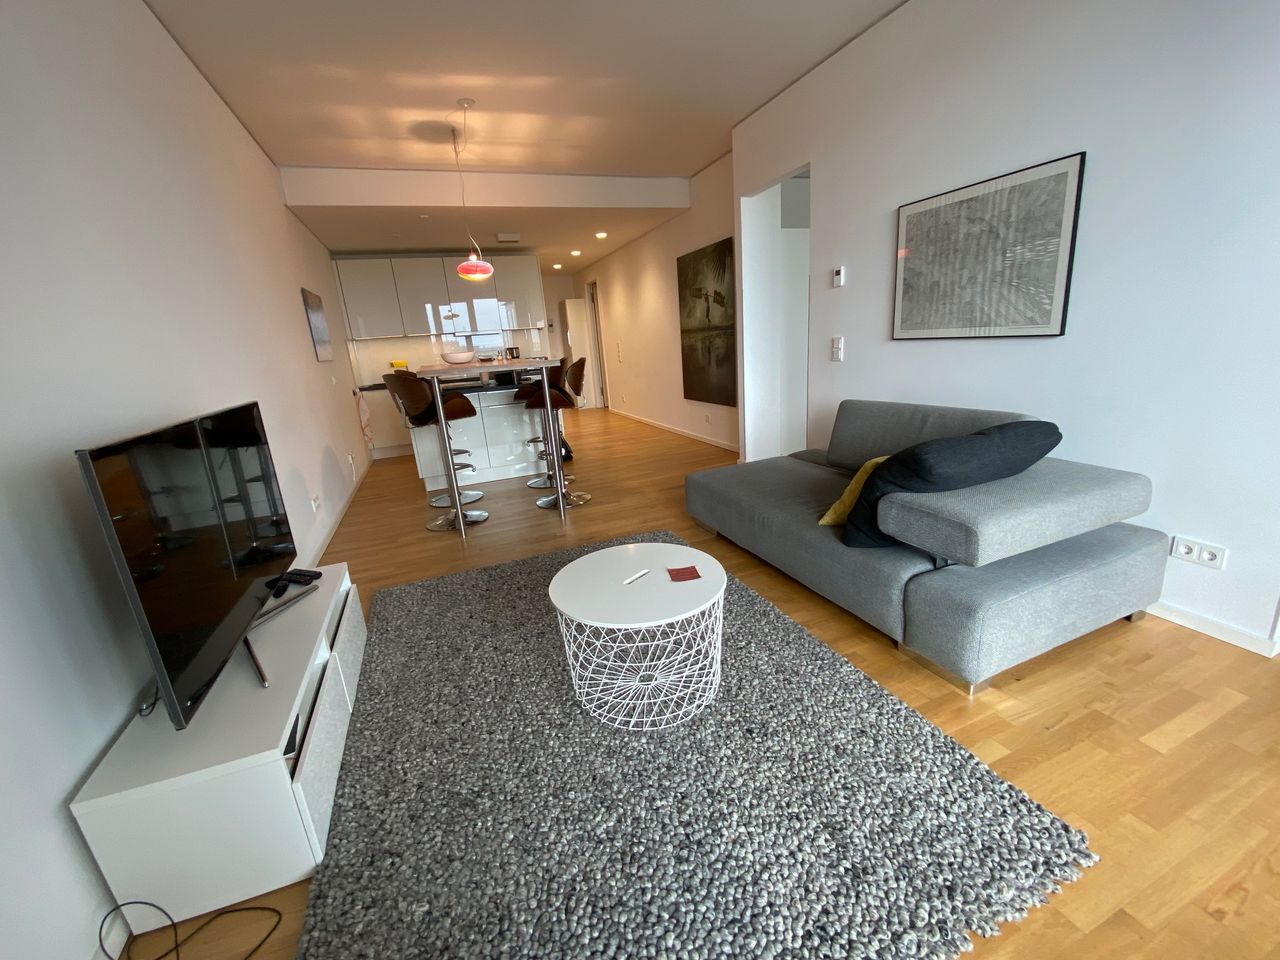 Attractive apartment with loft character near Europagarten